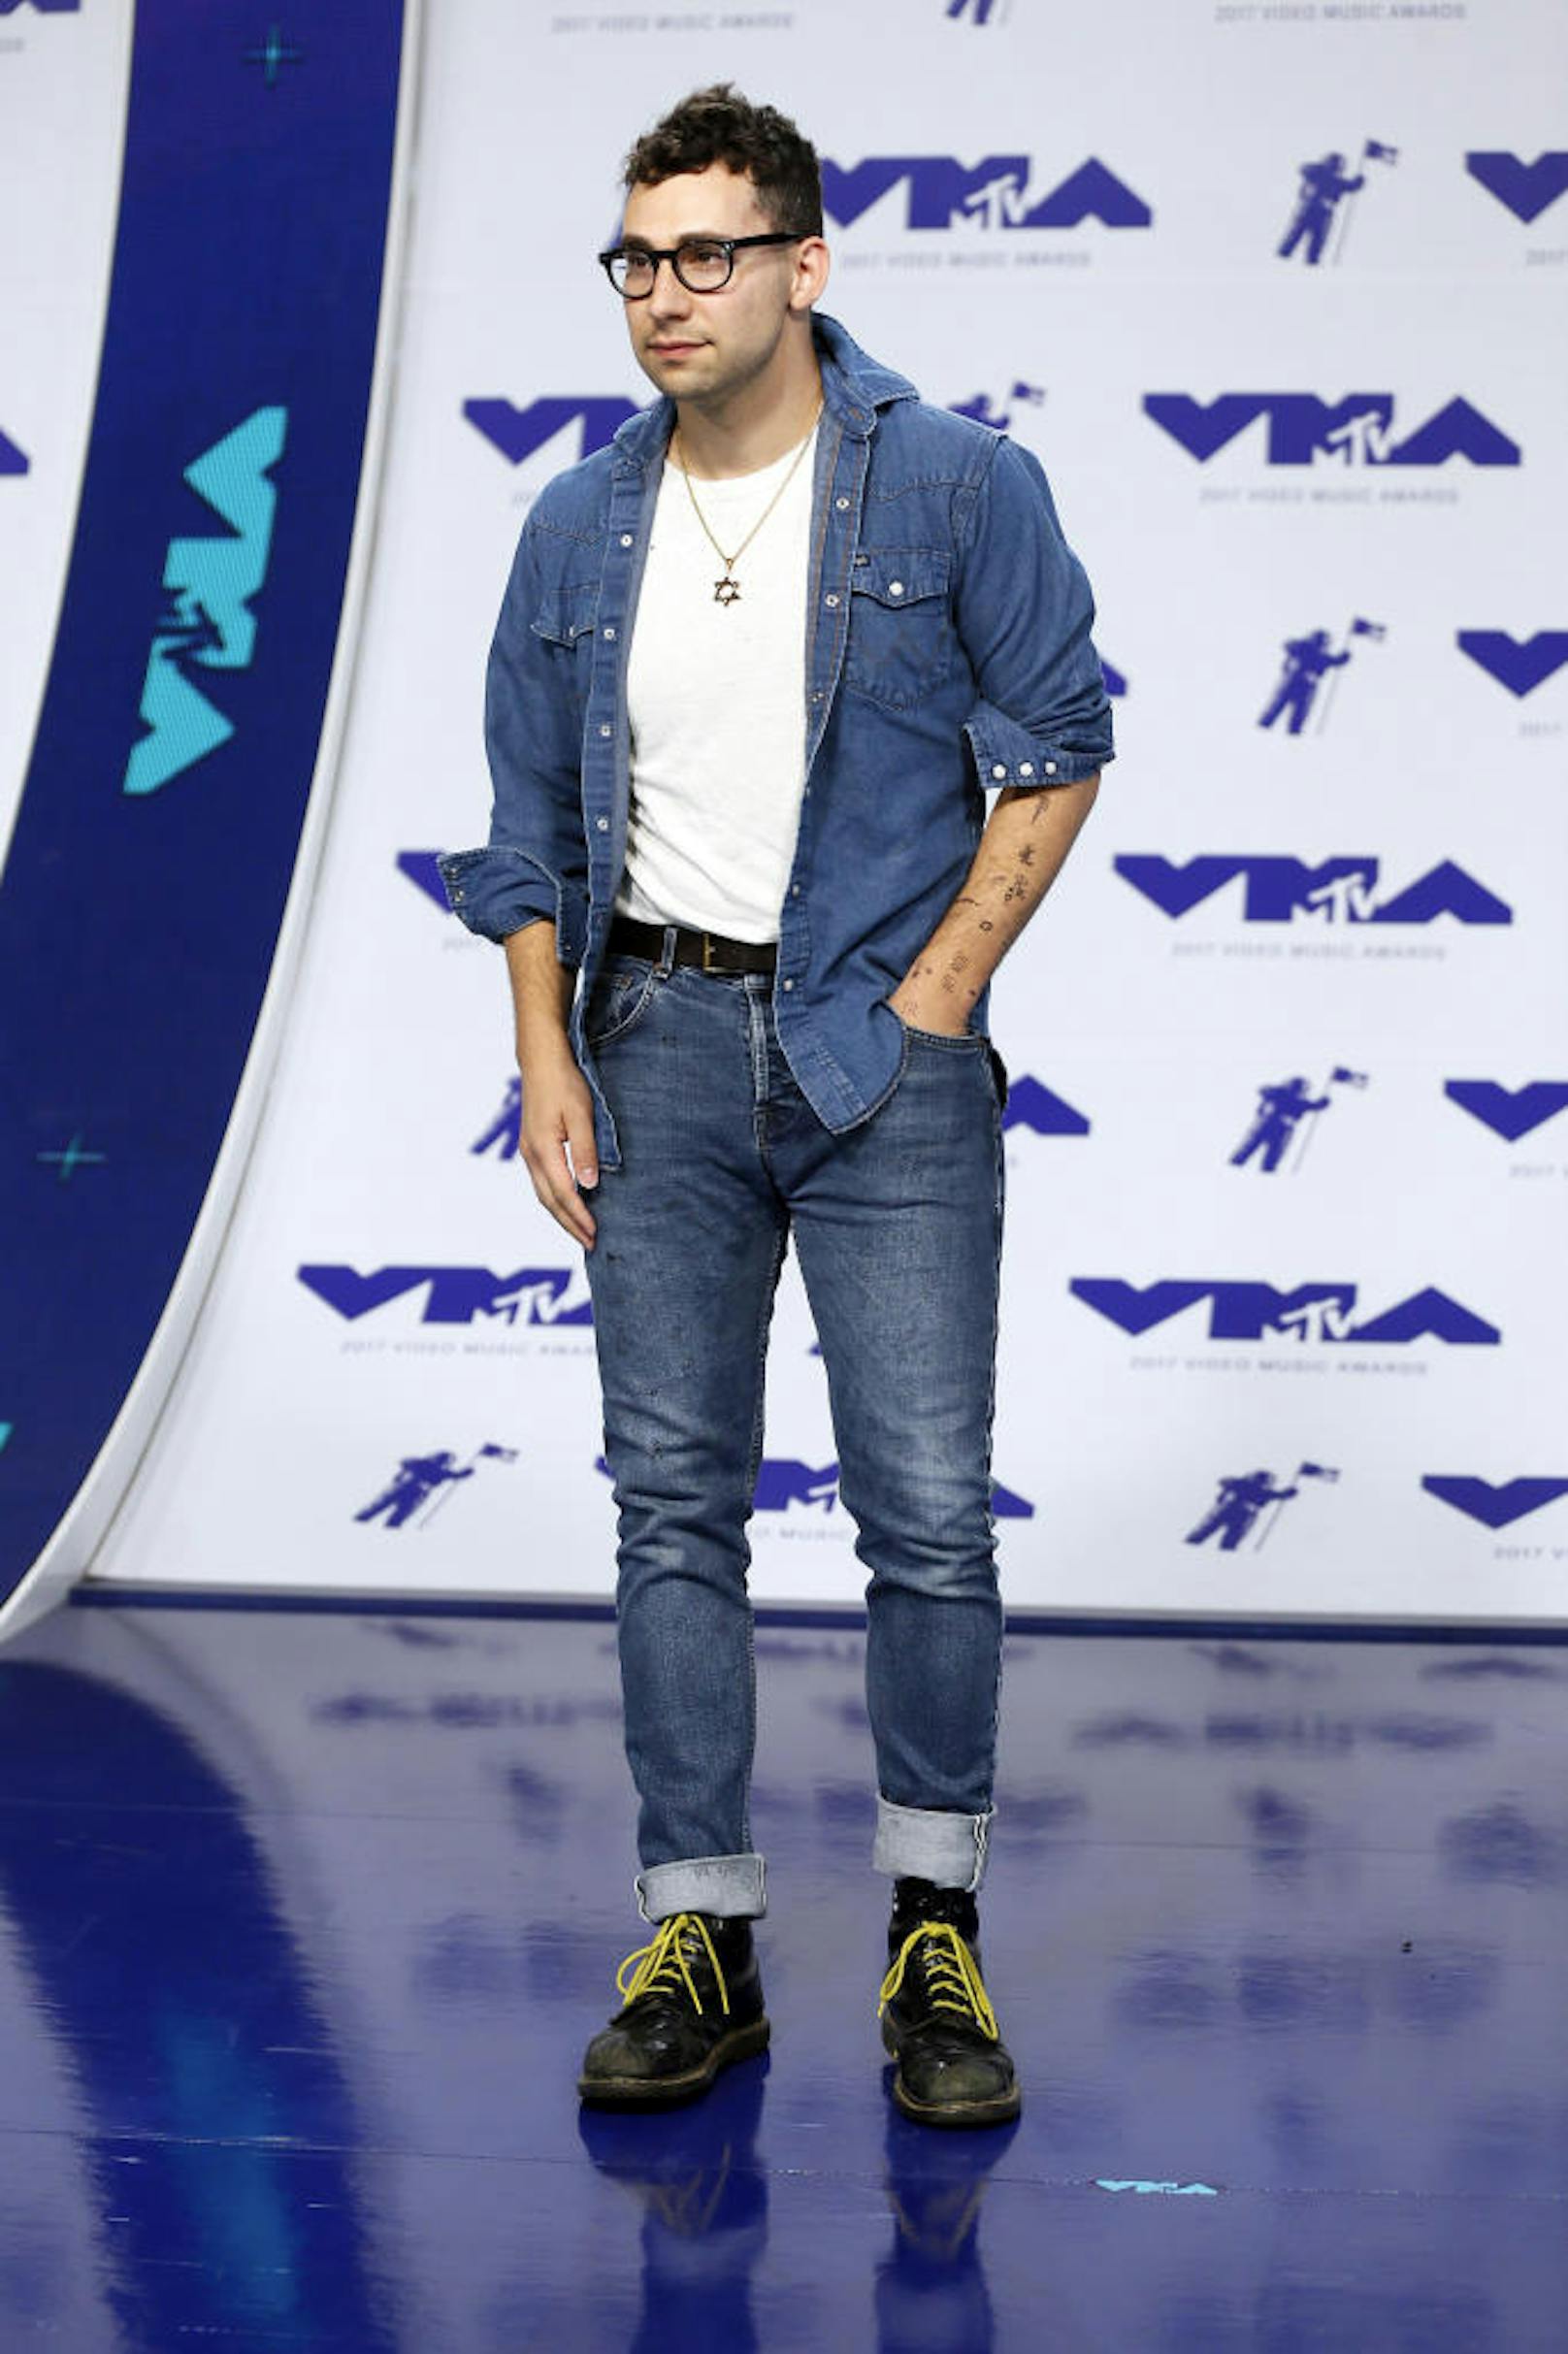 2017 MTV Video Music Awards: Jack Antonoff